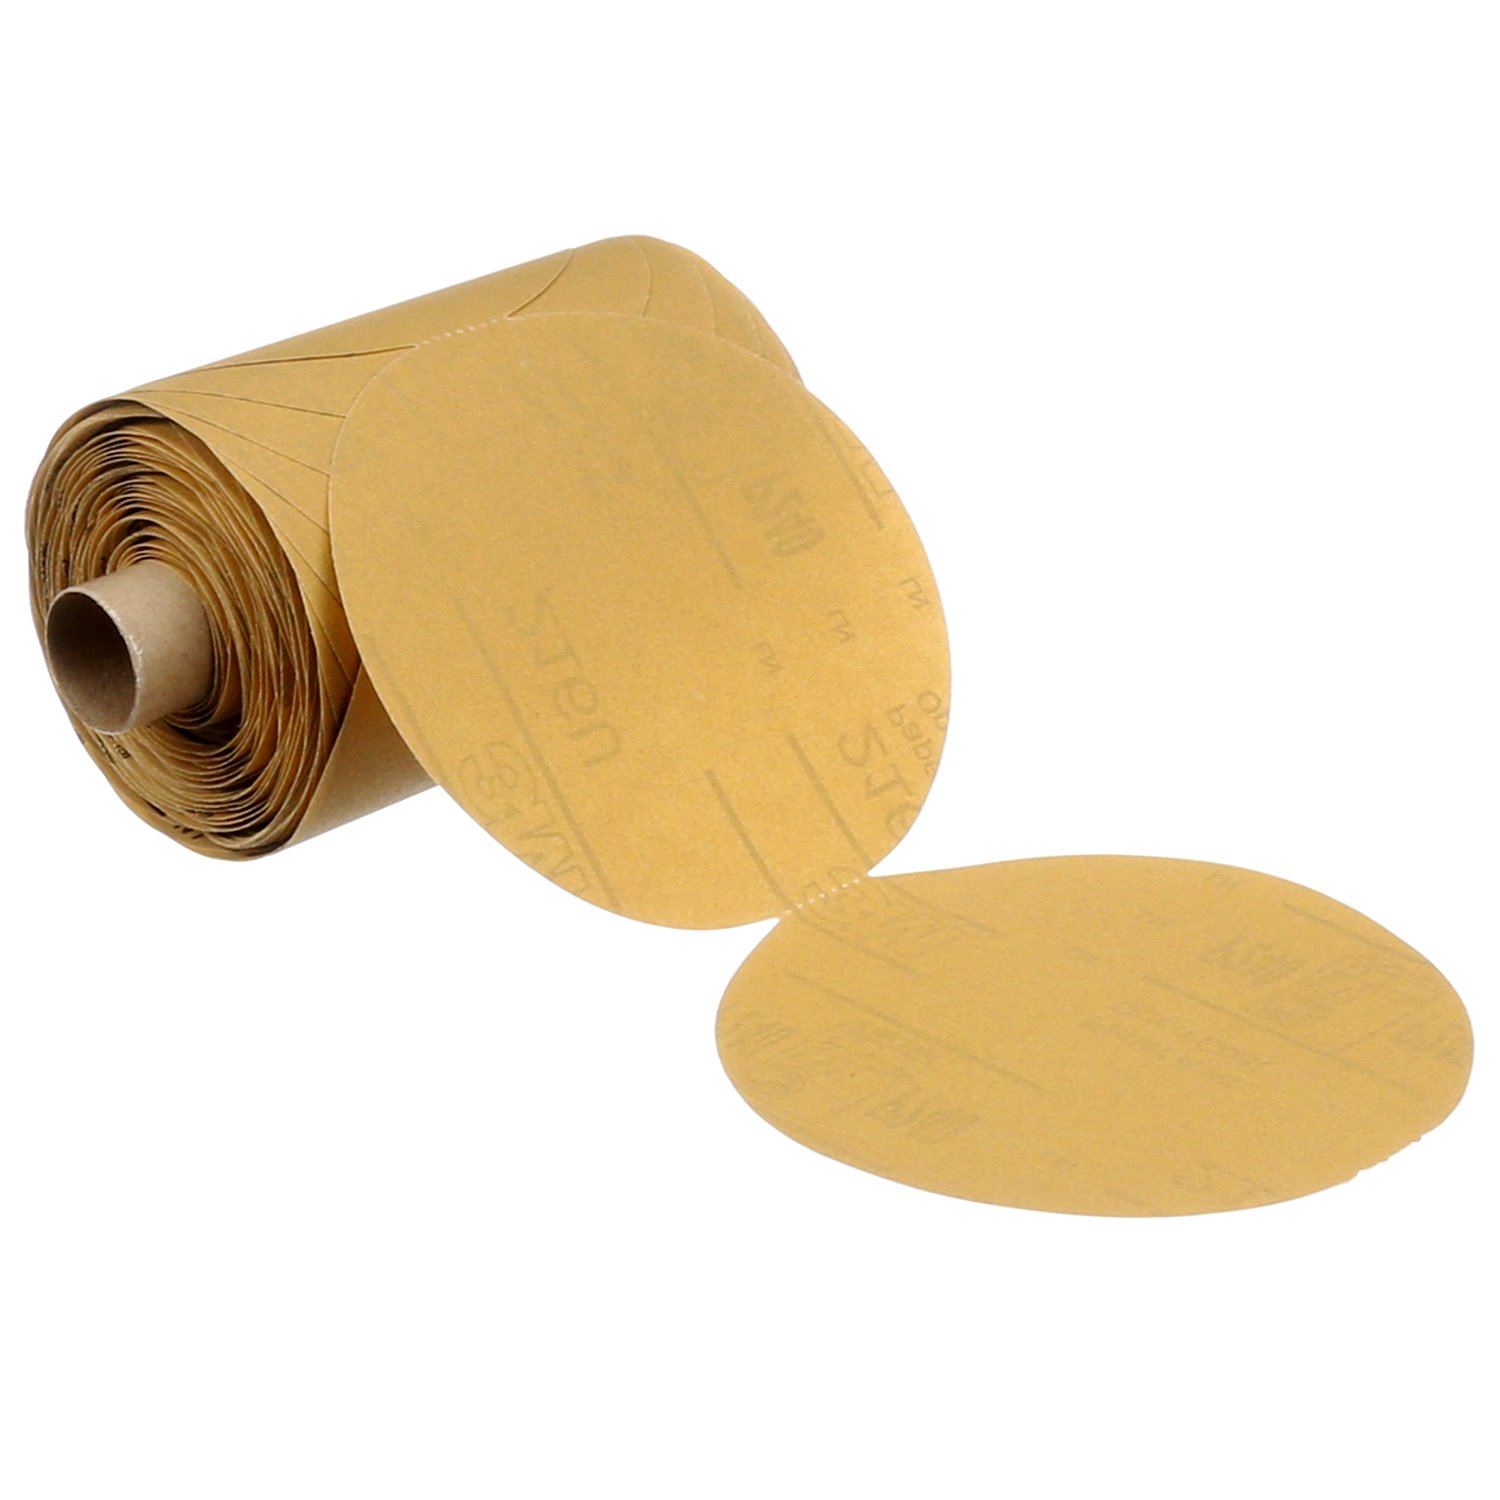 7000118381 - 3M Stikit Gold Paper Disc Roll 216U, 5 in x NH P600 A-weight, 175
Discs/Roll, 6 Rolls/Case